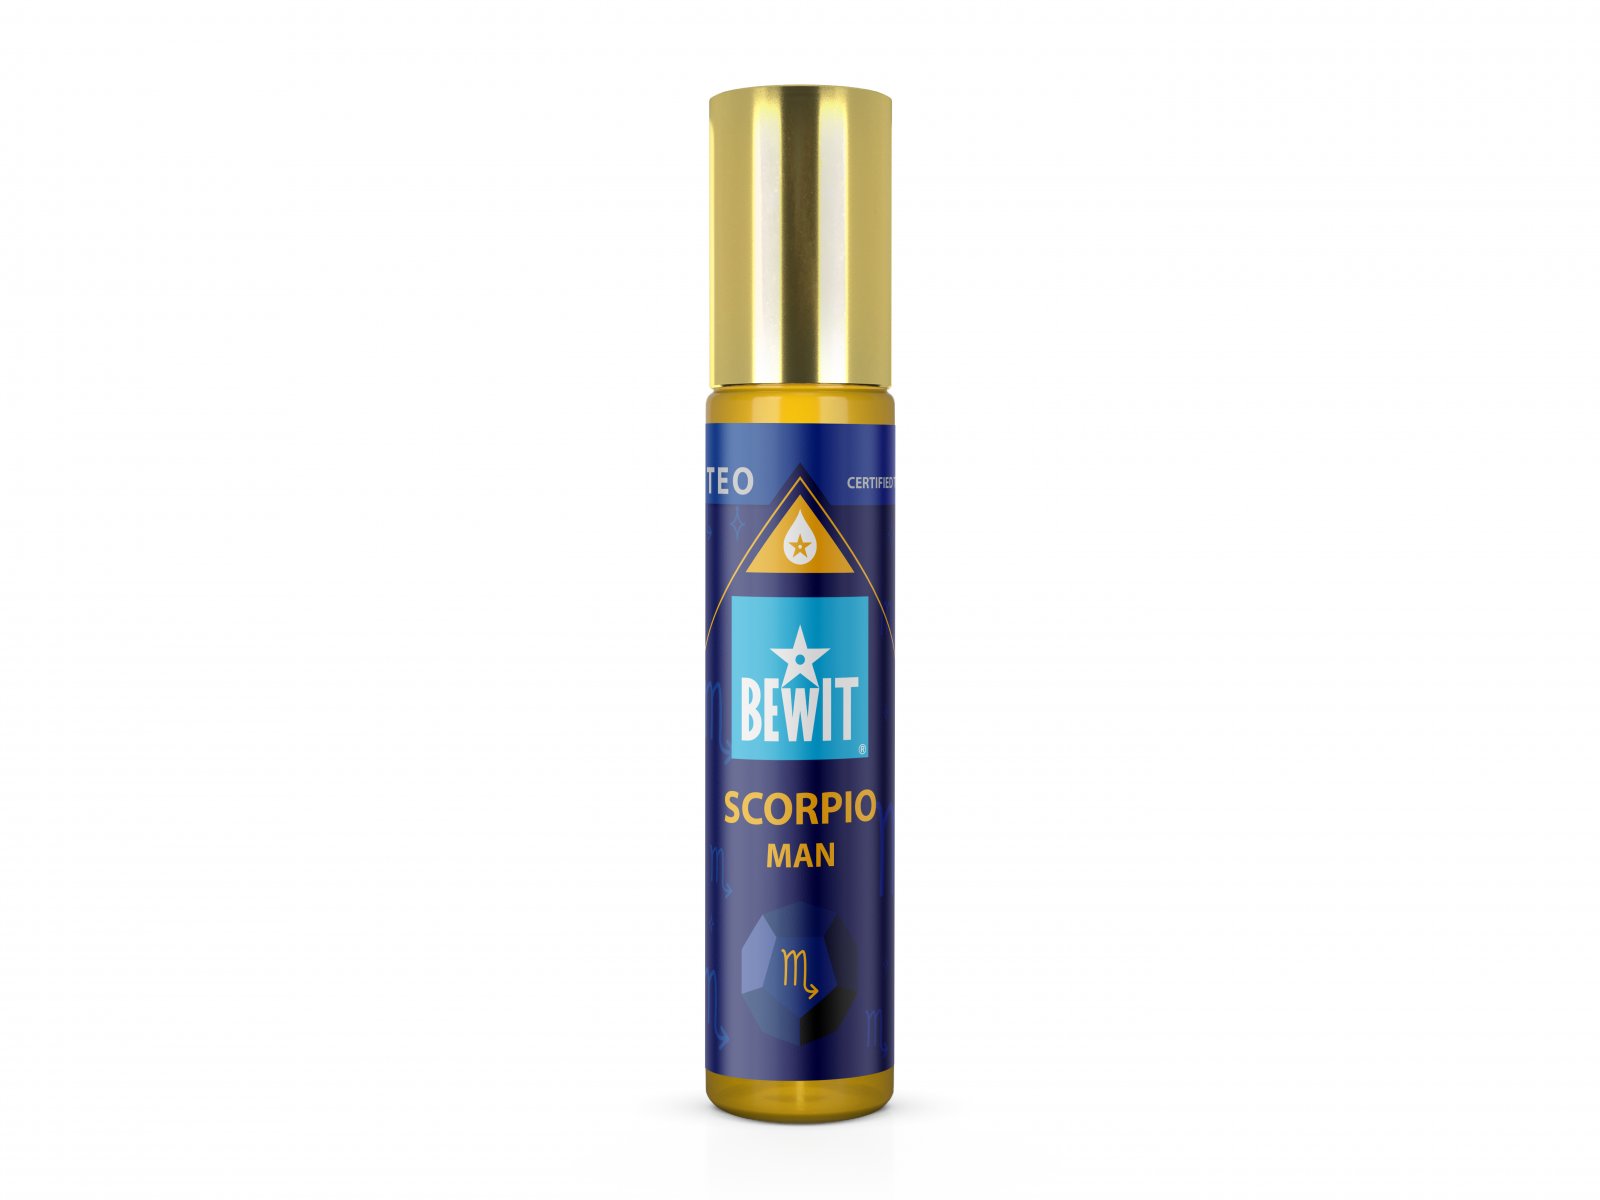 BEWIT MAN SCORPIO (SCORPION) - Men's roll-on oil perfume